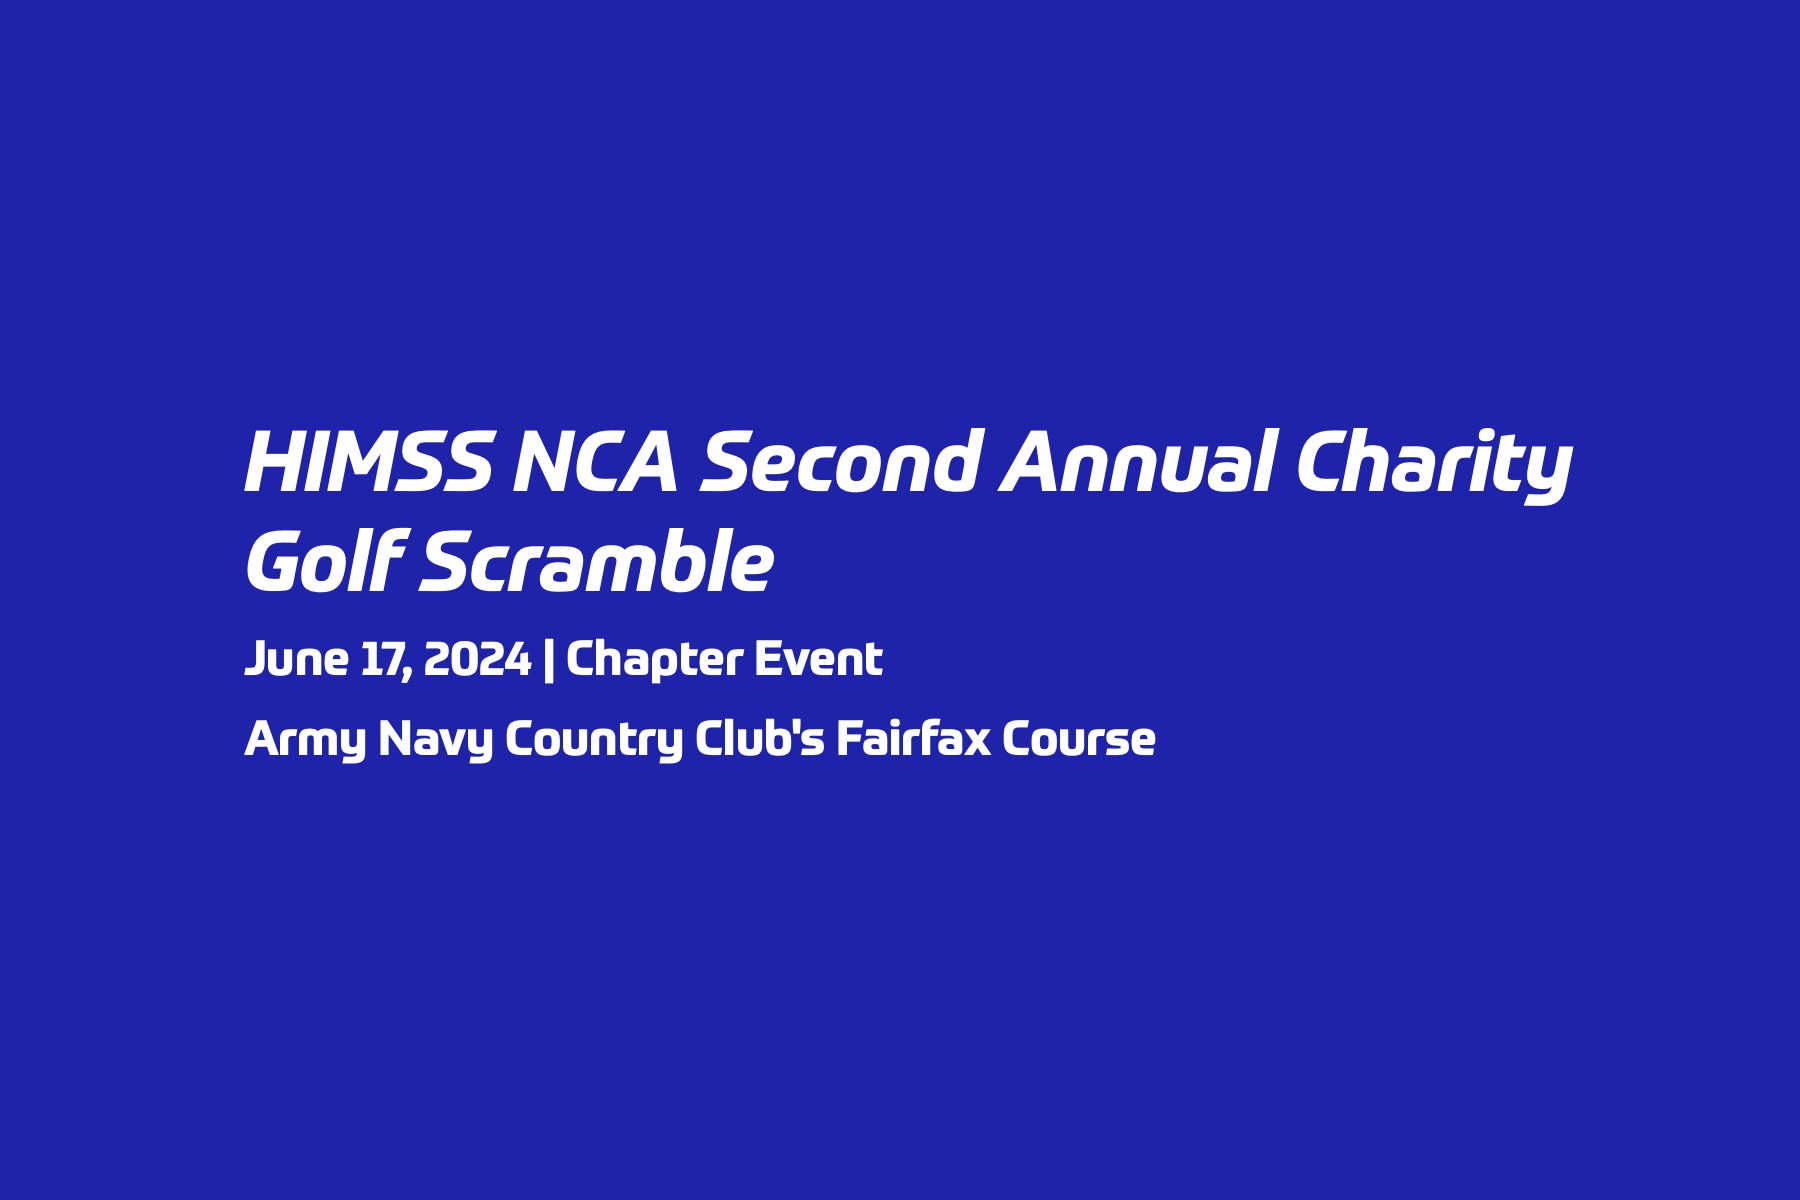 HIMSS NCA Annual Charity Golf Scramble